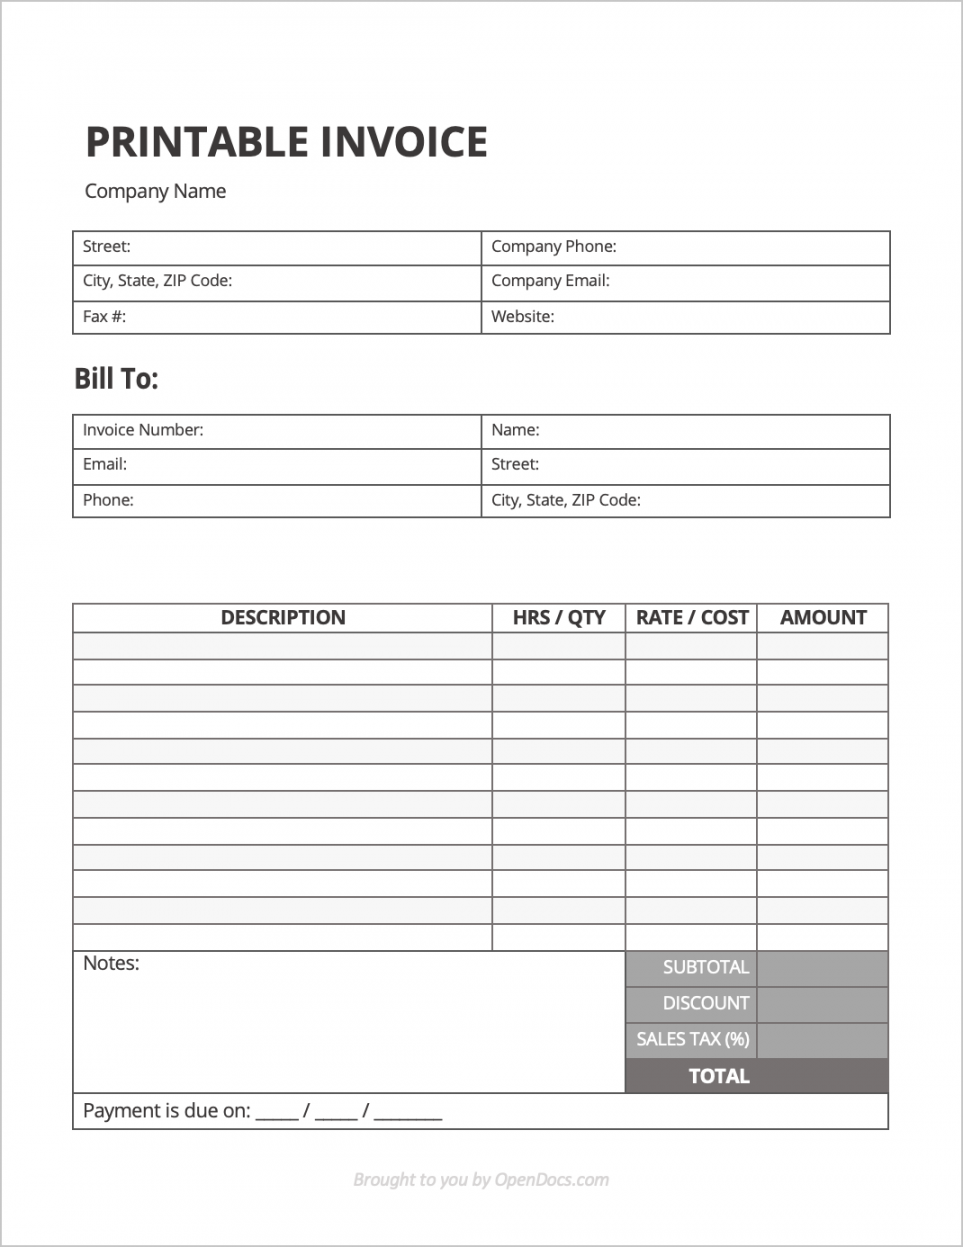 Free Printable Invoice Templates - Printable - Free Printable Invoice Template  PDF  WORD  EXCEL